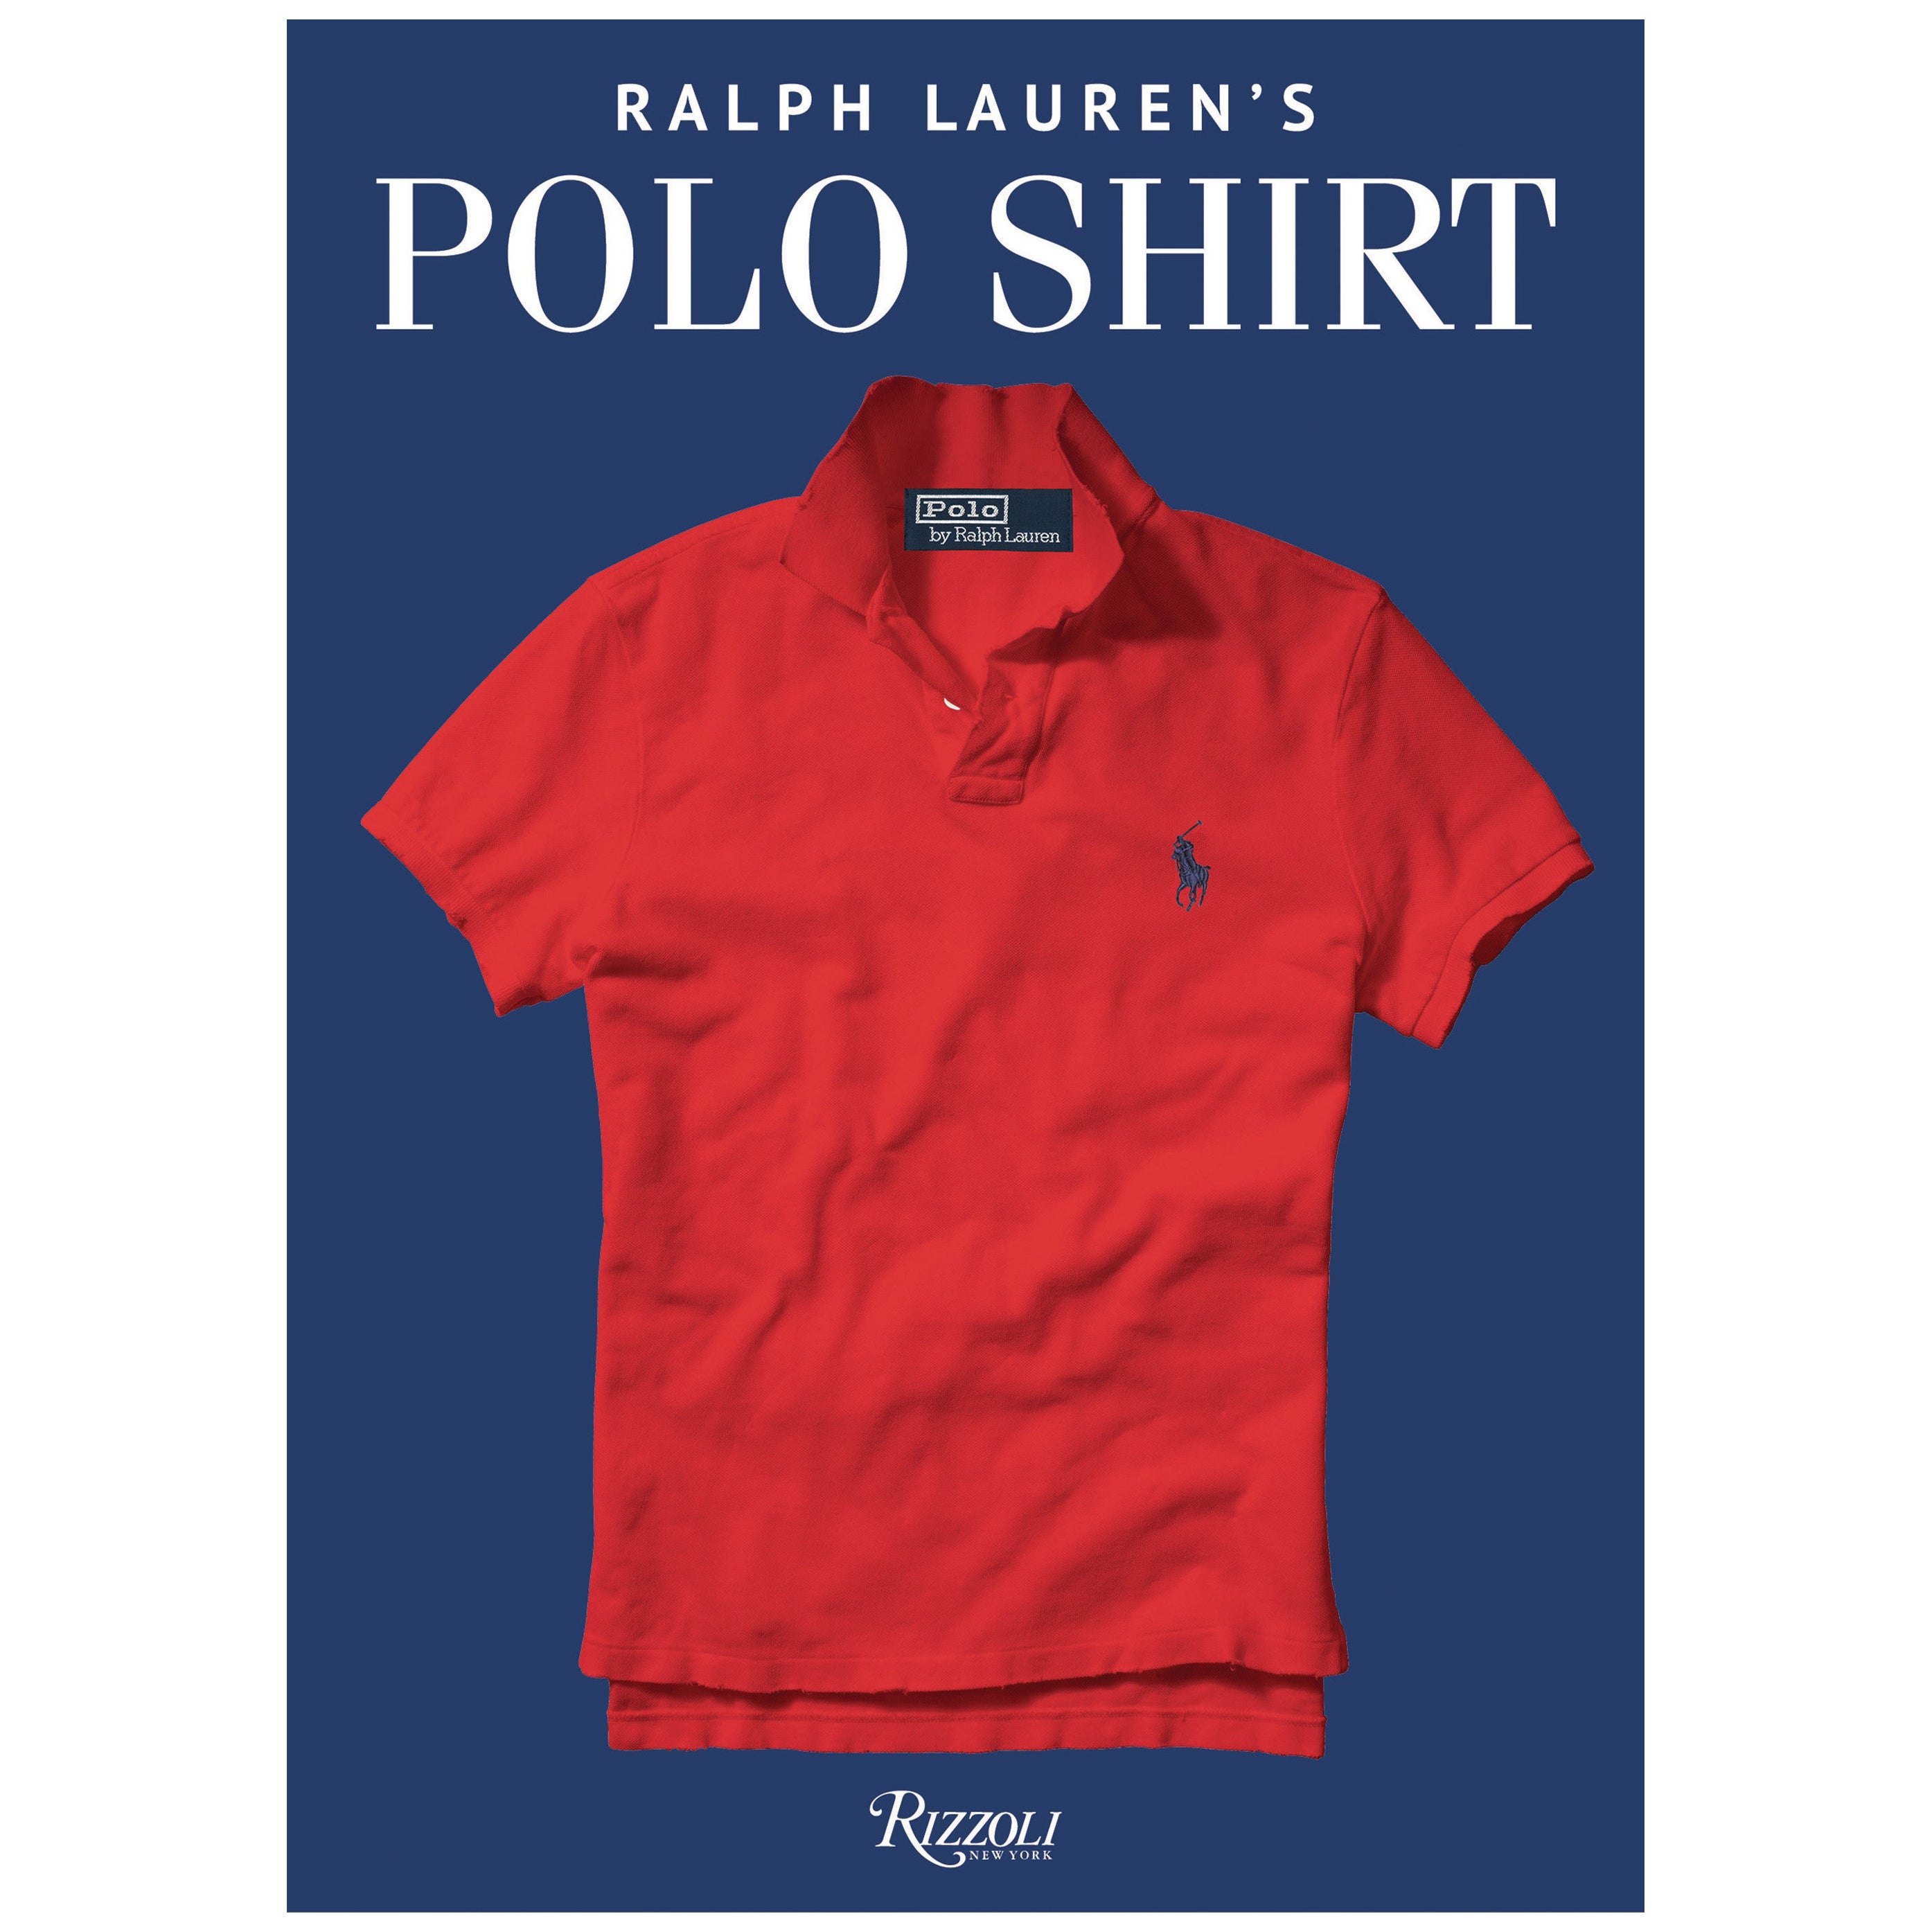 Polo Ralph Lauren's en vente